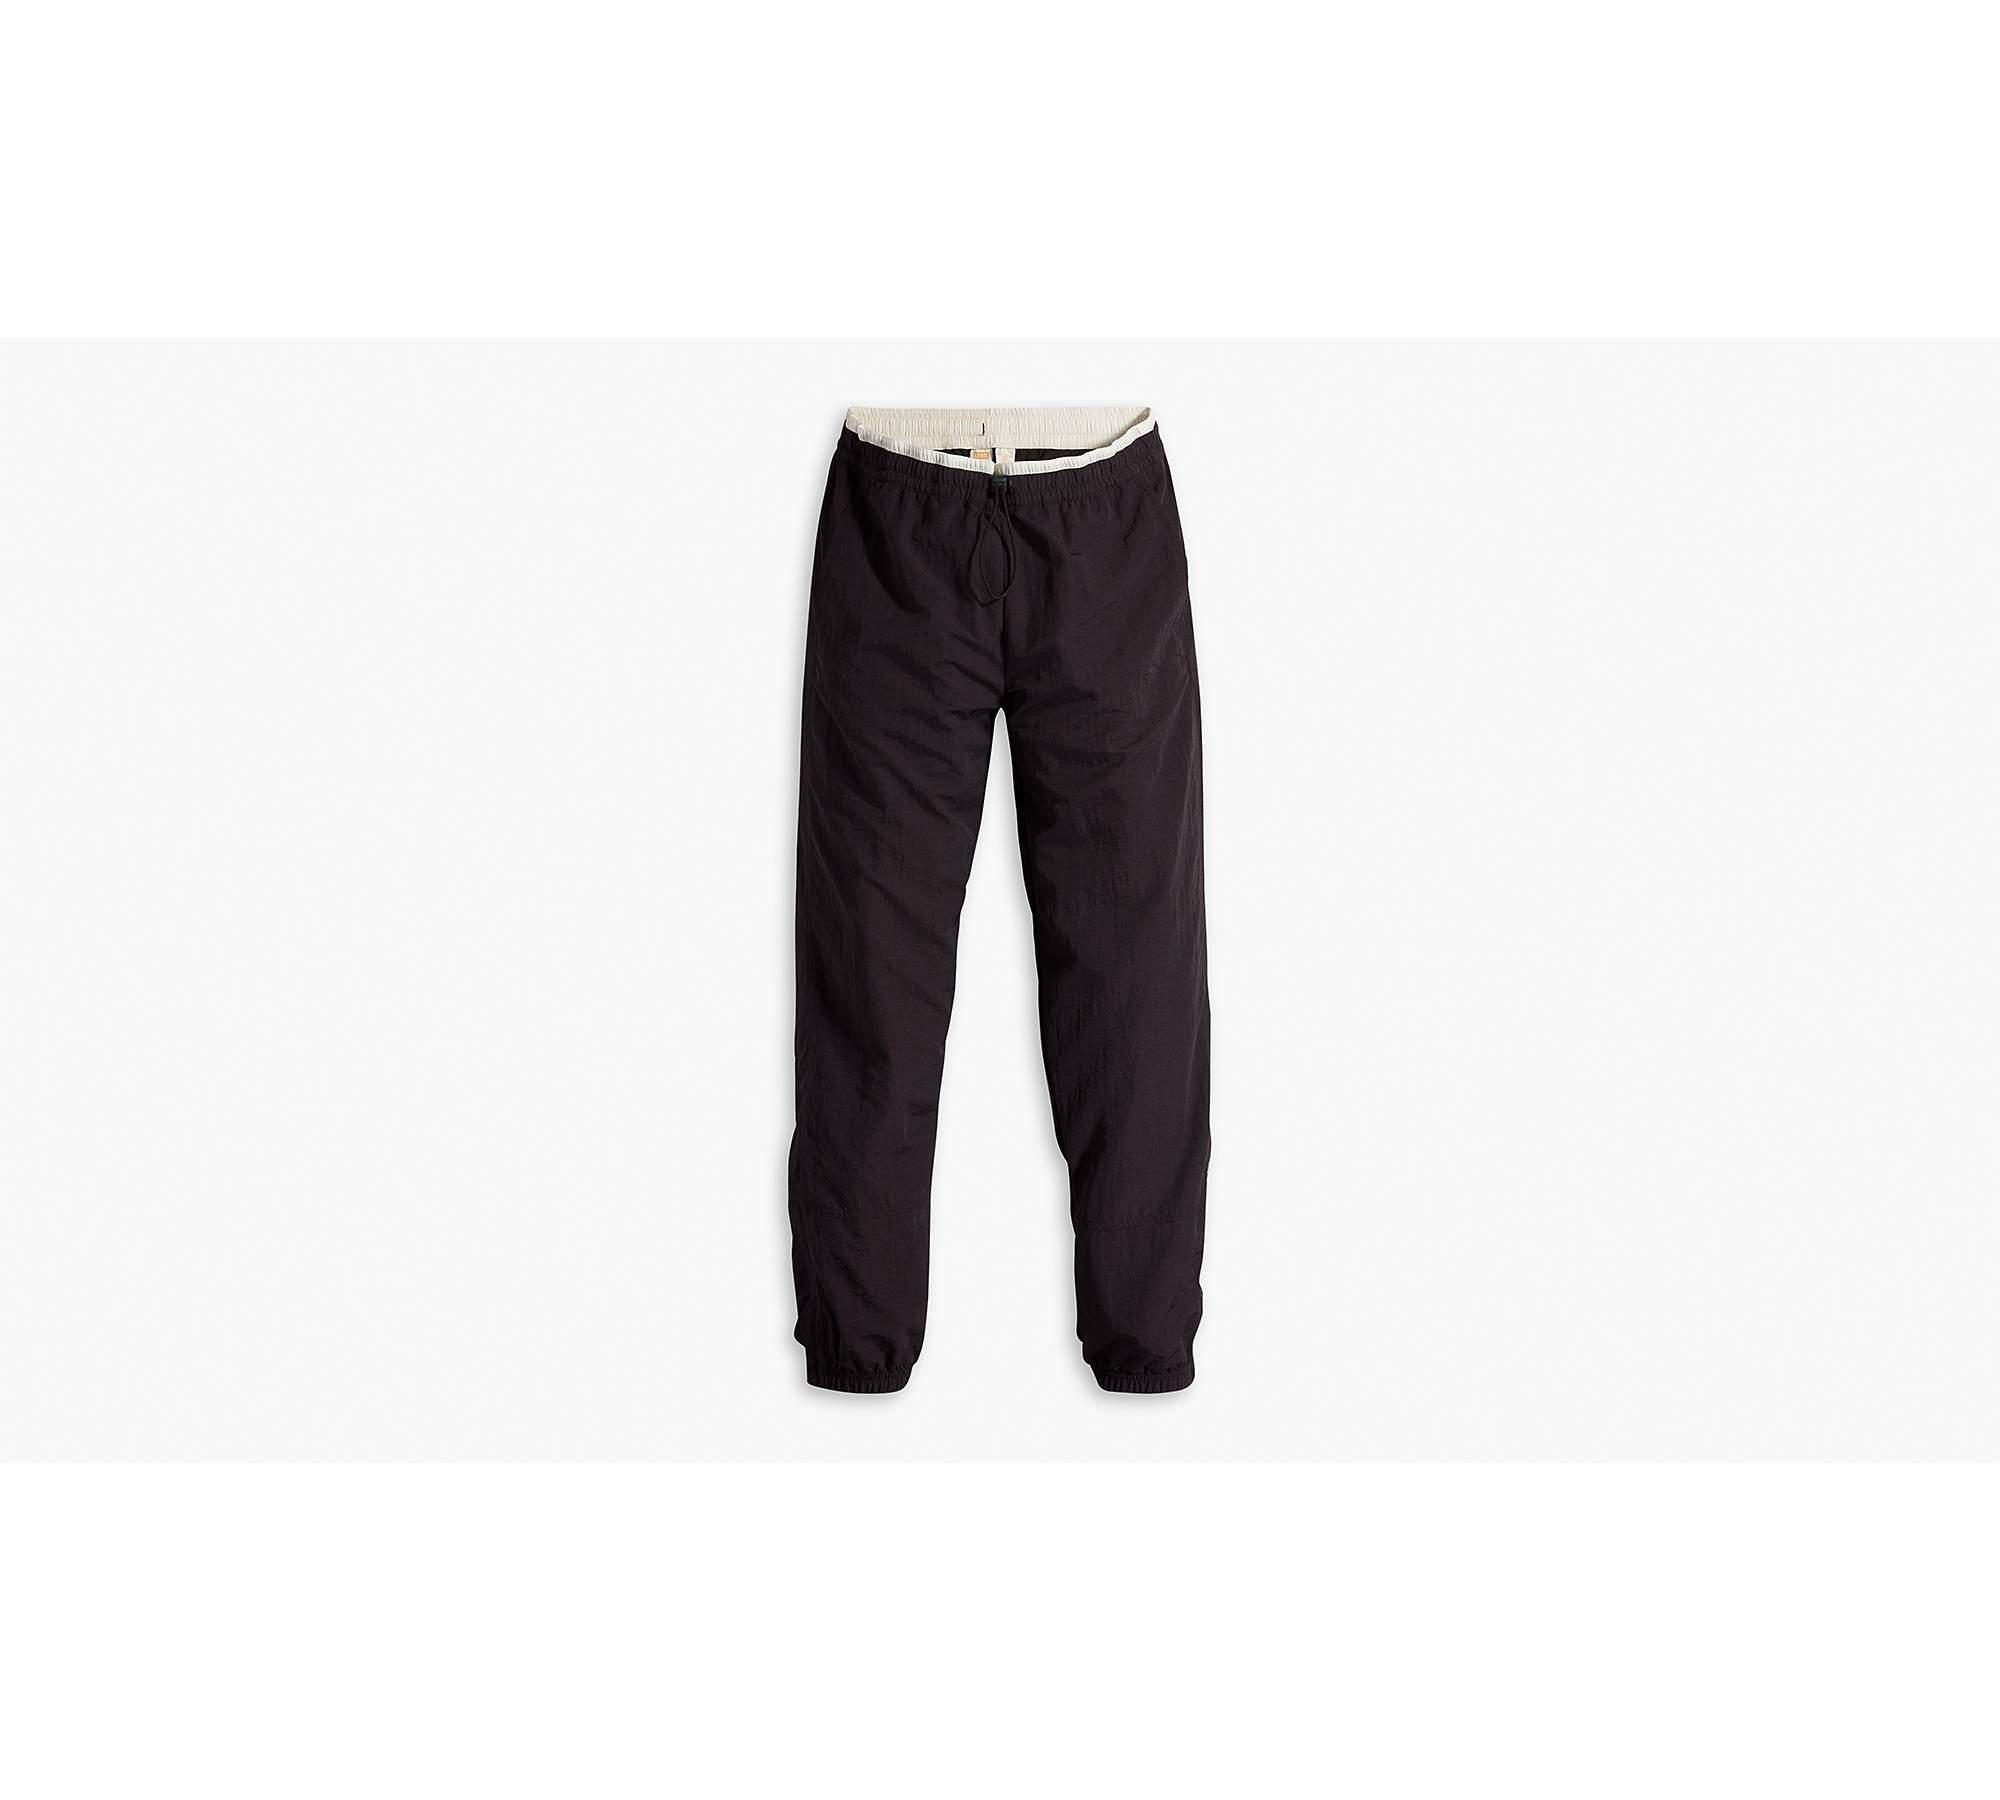 TRIMTEX BASIC 3/4 nylon pants, black